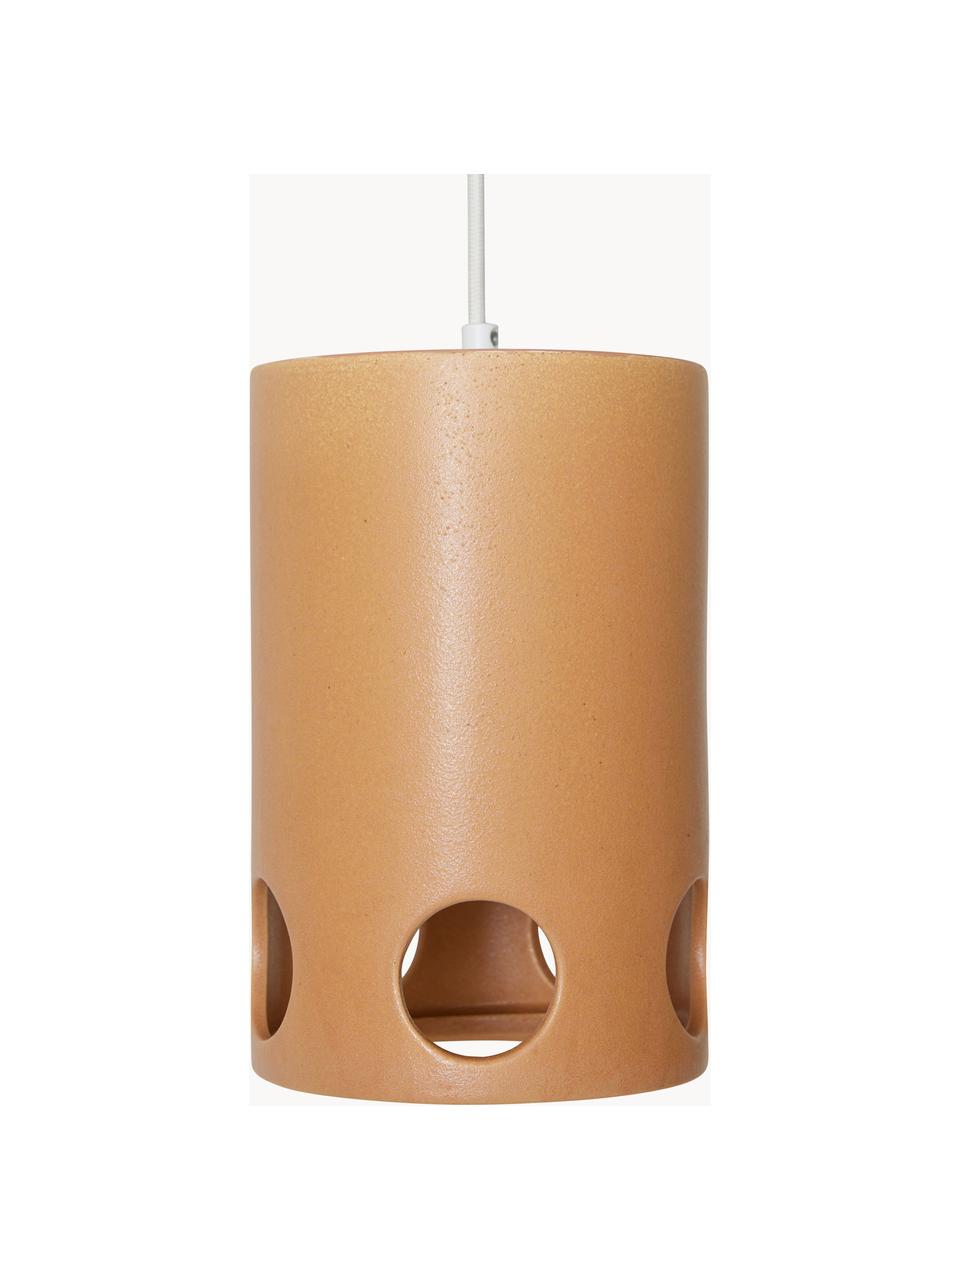 Handgemaakte hanglamp Peach, Lampenkap: keramiek, Lichtbruin, Ø 15 x H 23 cm